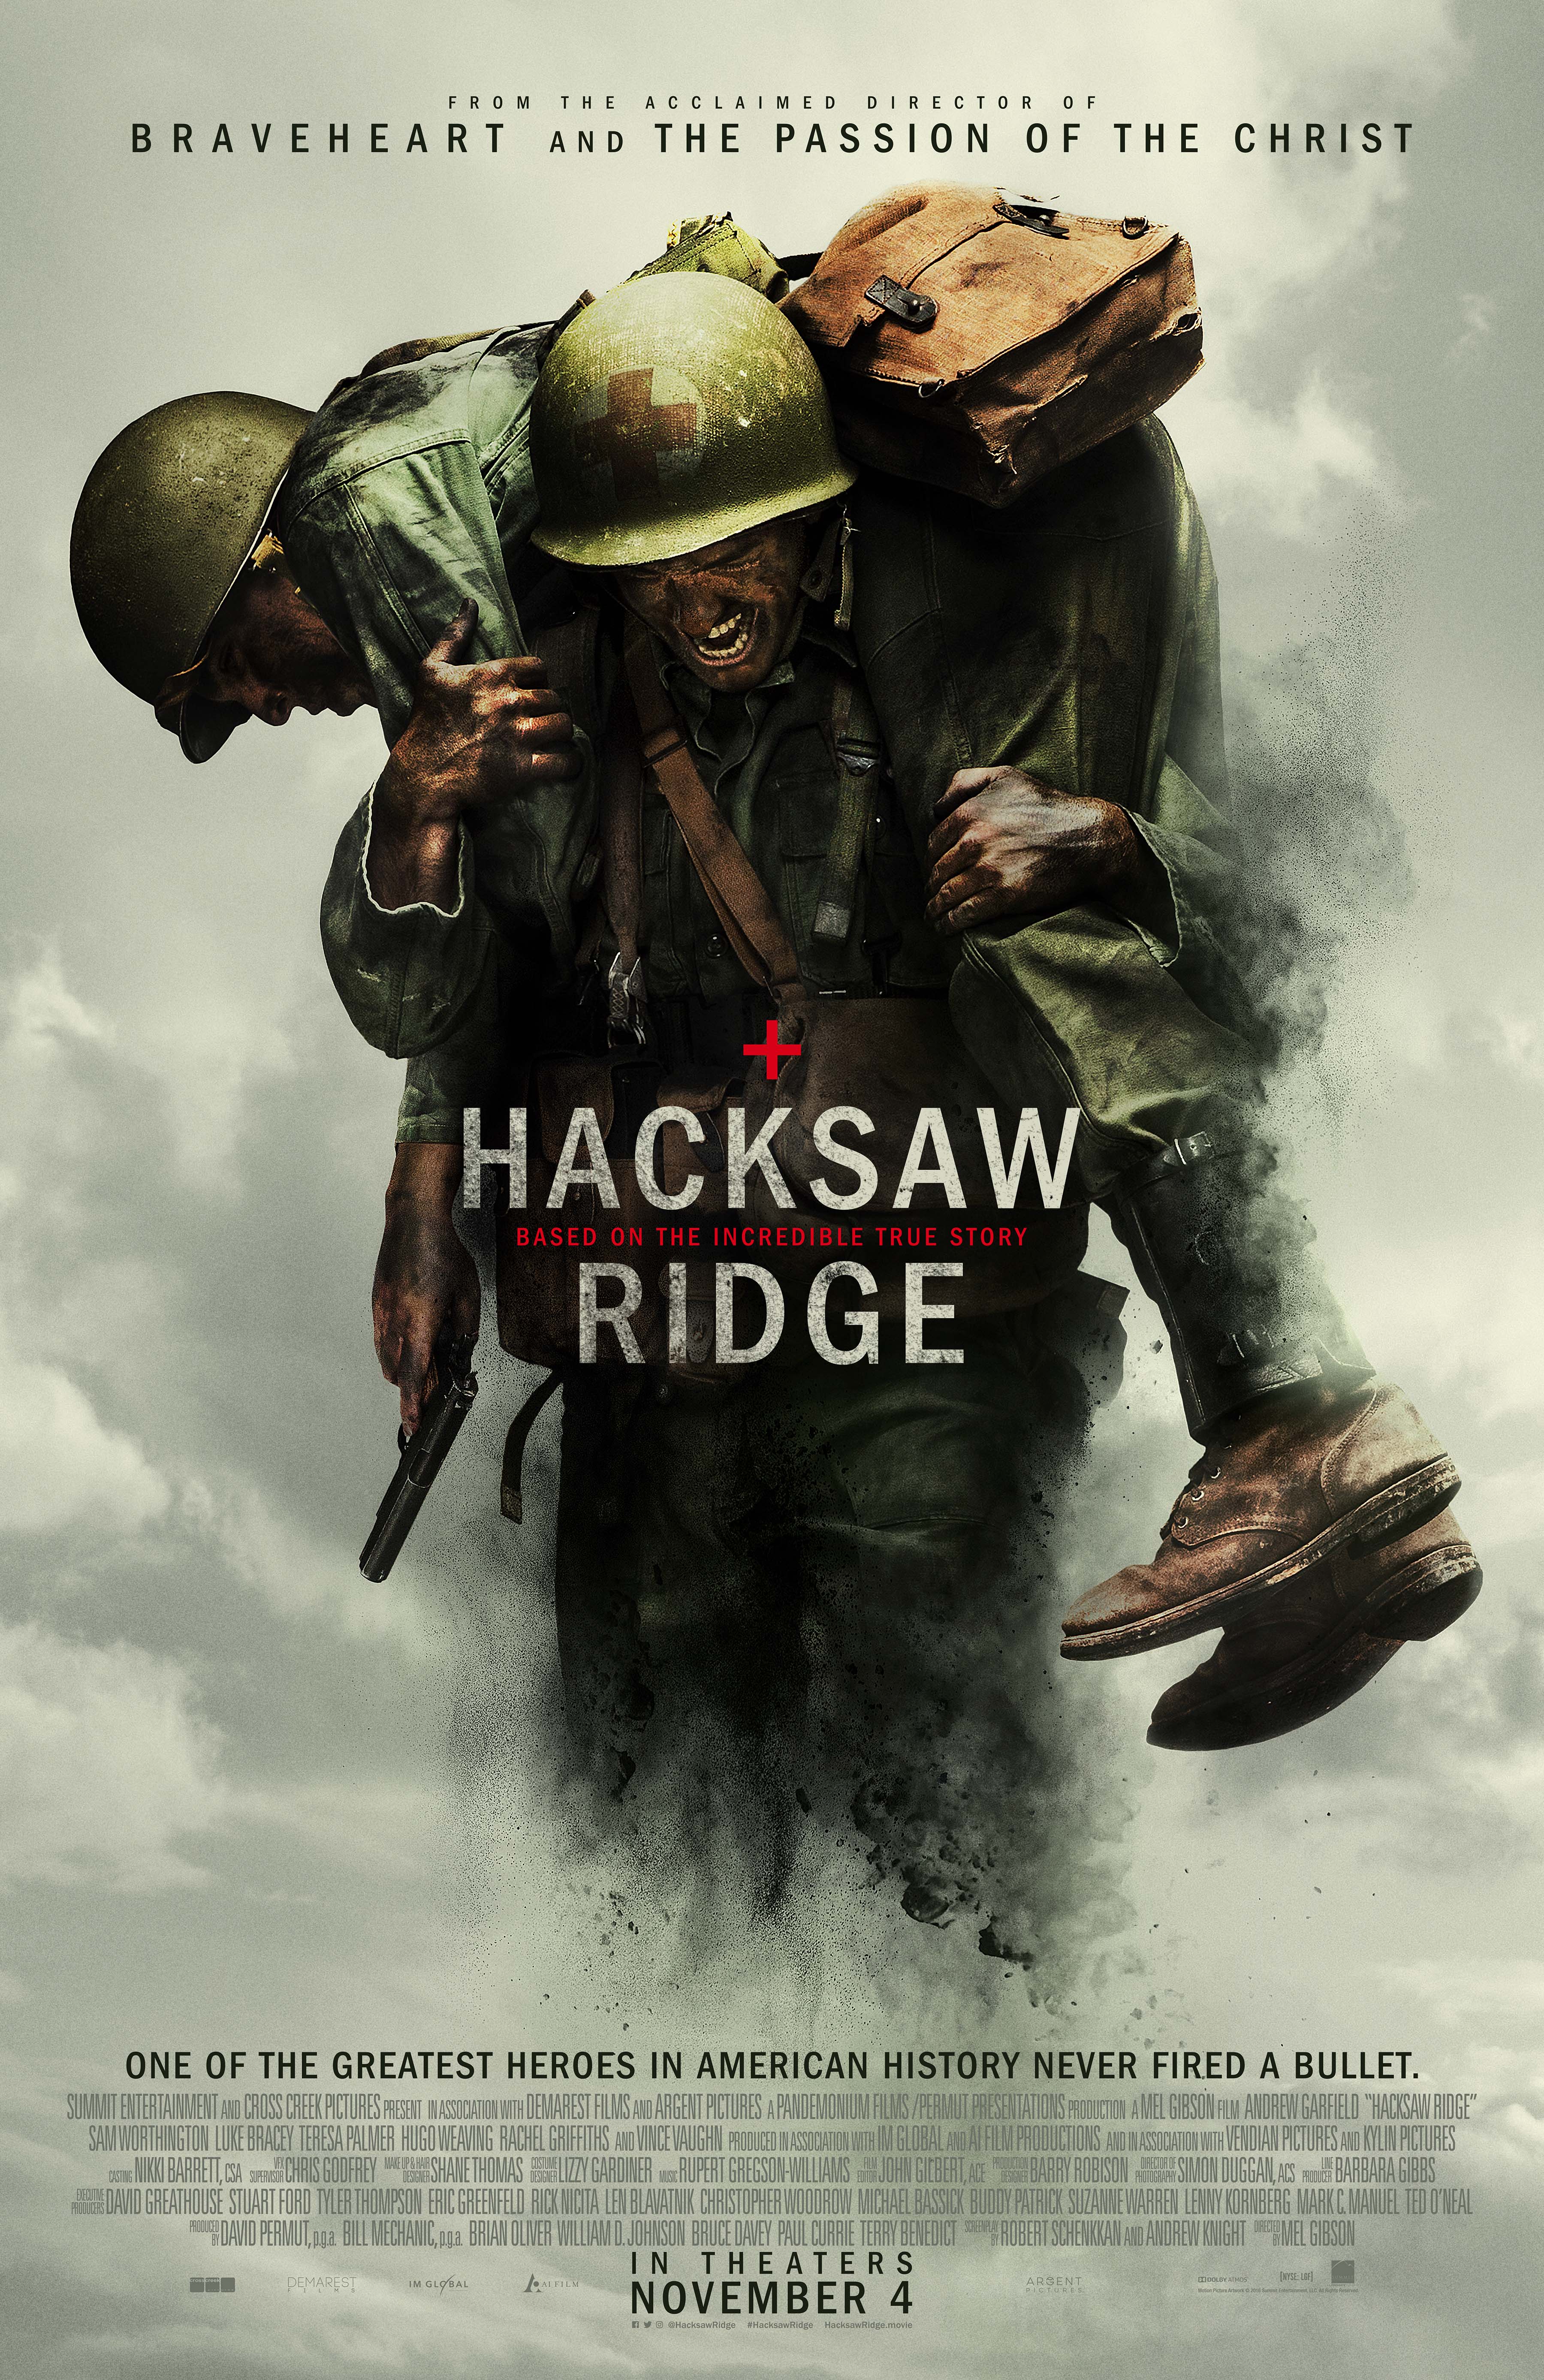 Hacksaw Ridge hits theaters Nov. 4, 2016.